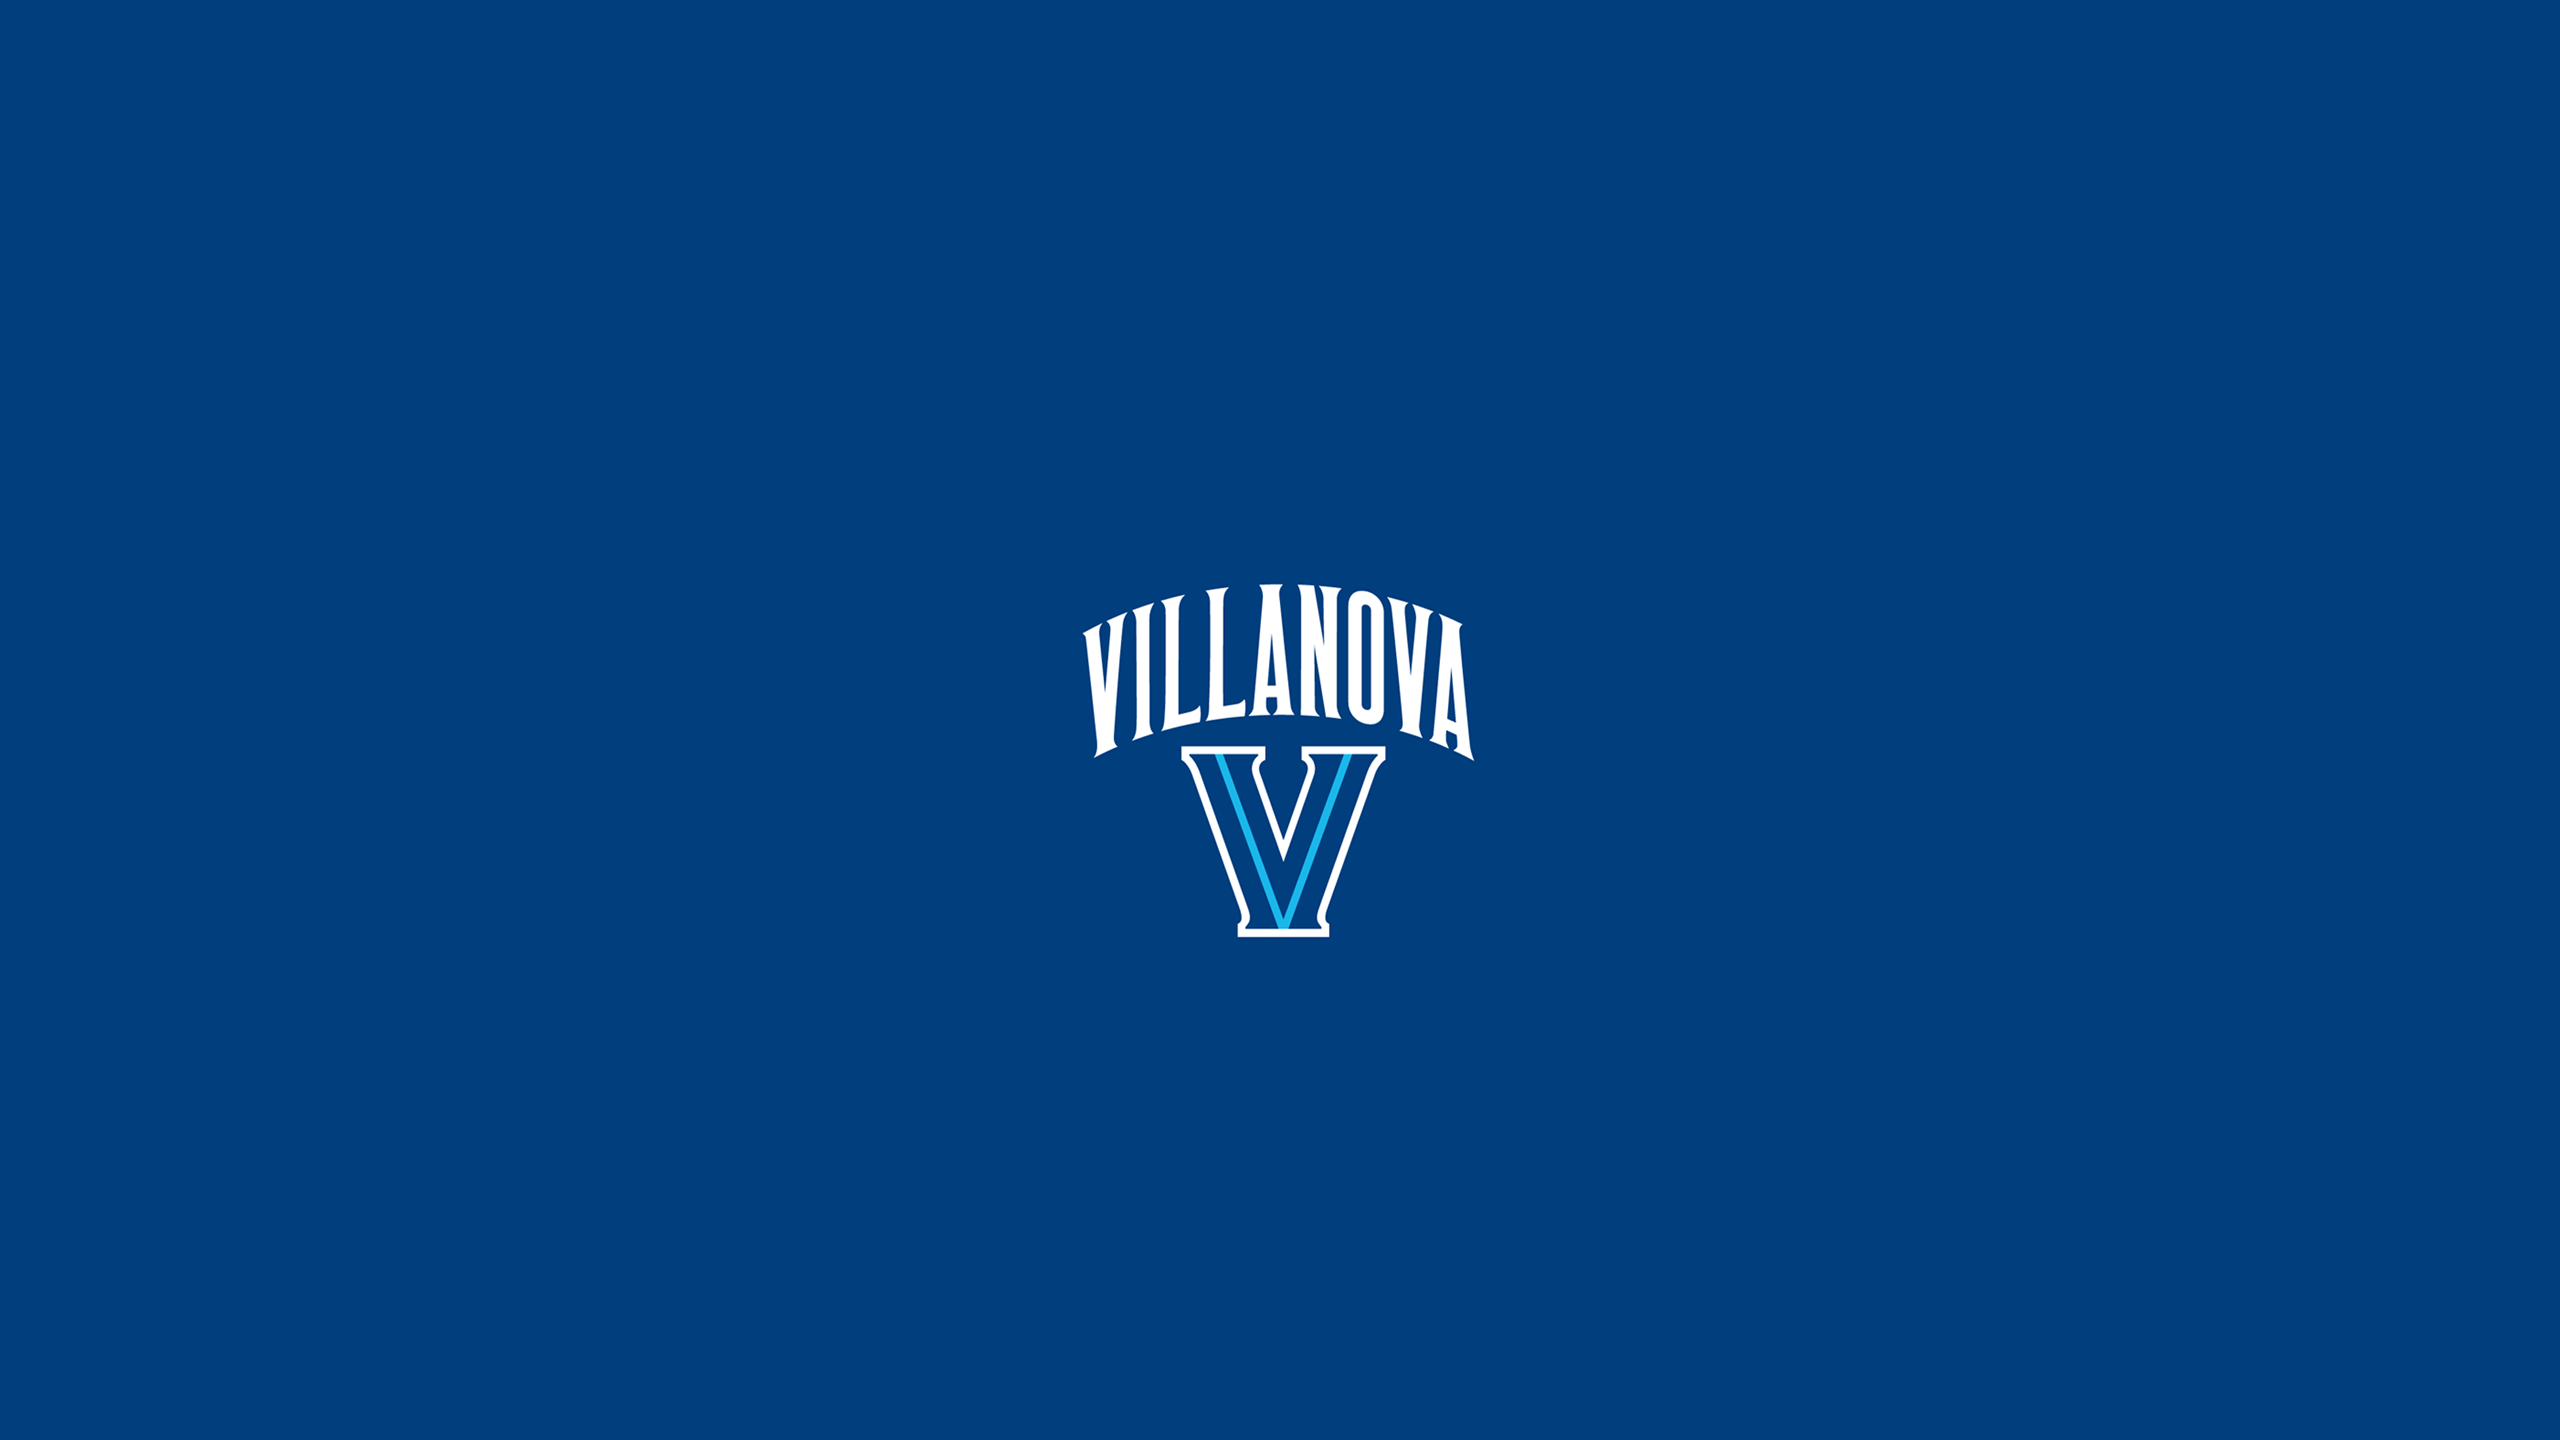 Villanova Wildcats Basketball - NCAAB - Square Bettor